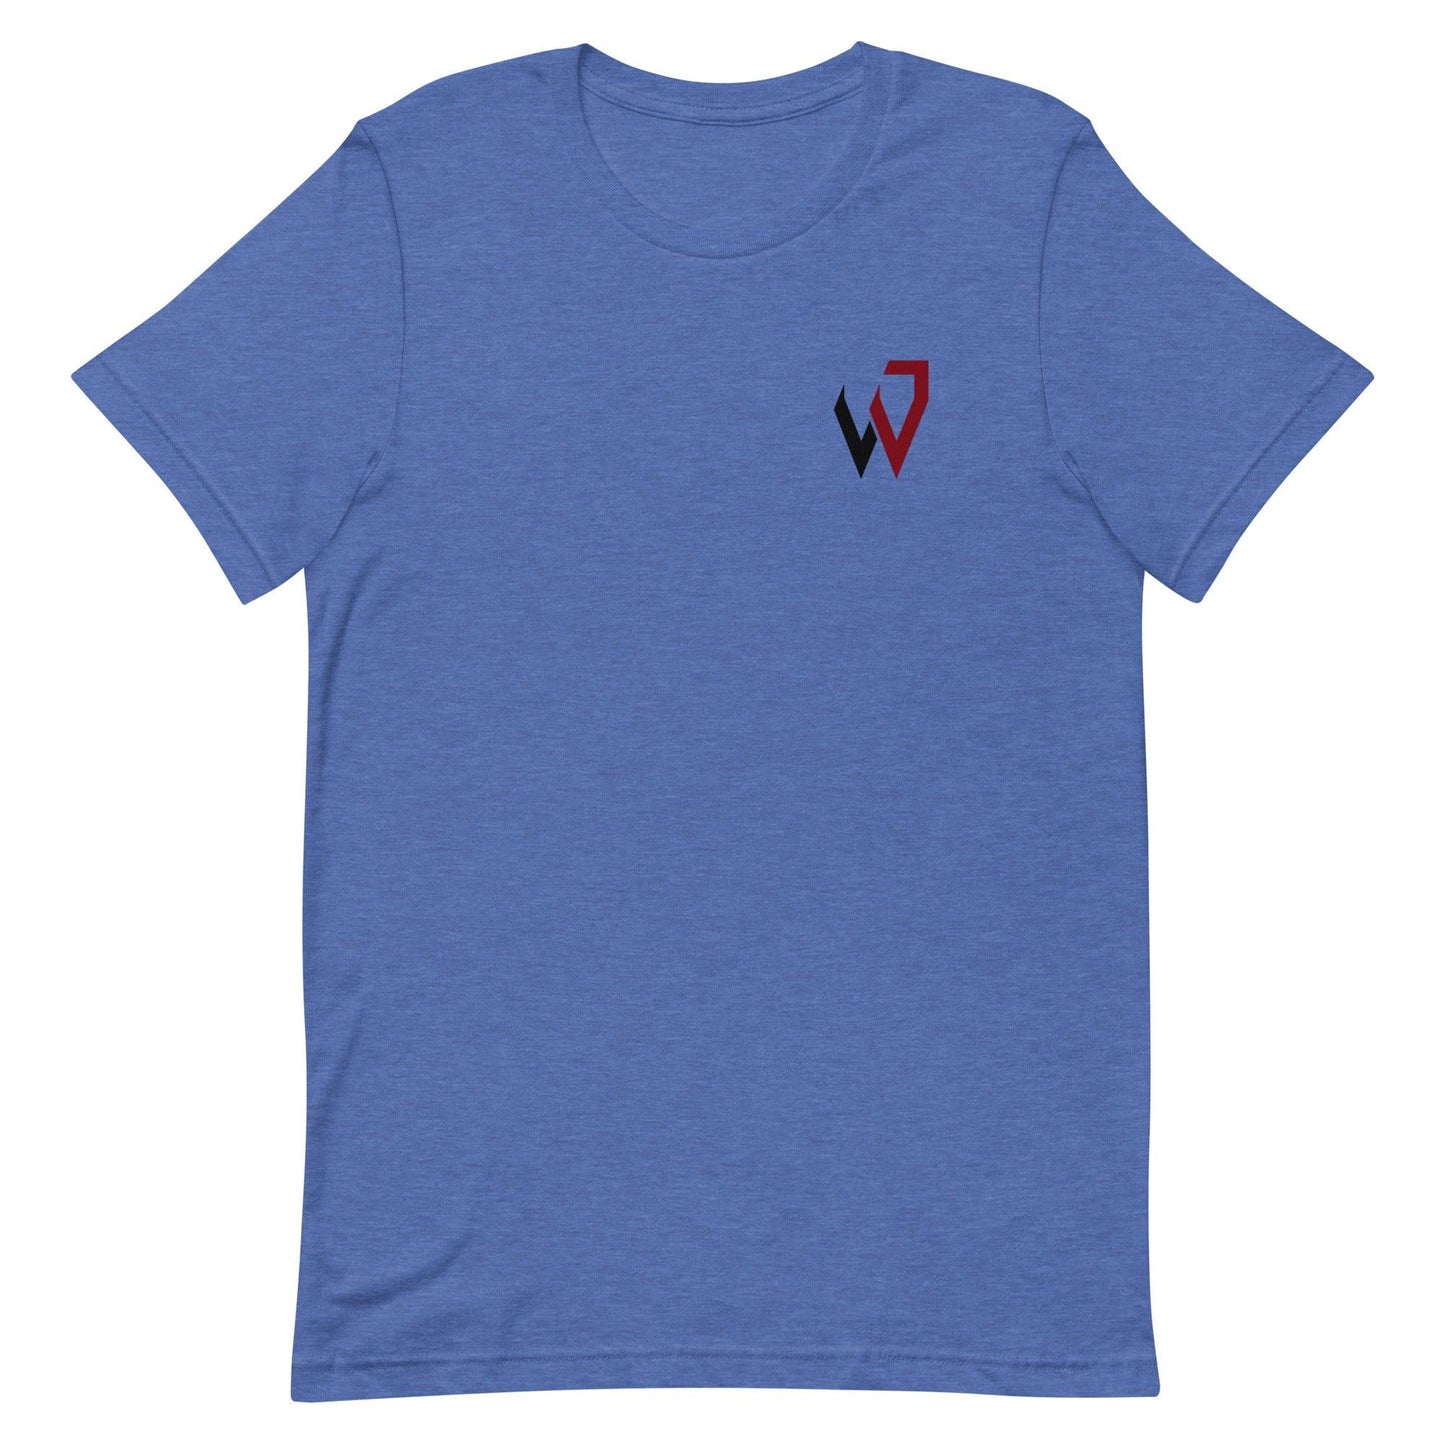 Jacobi Wright "Essential" t-shirt - Fan Arch